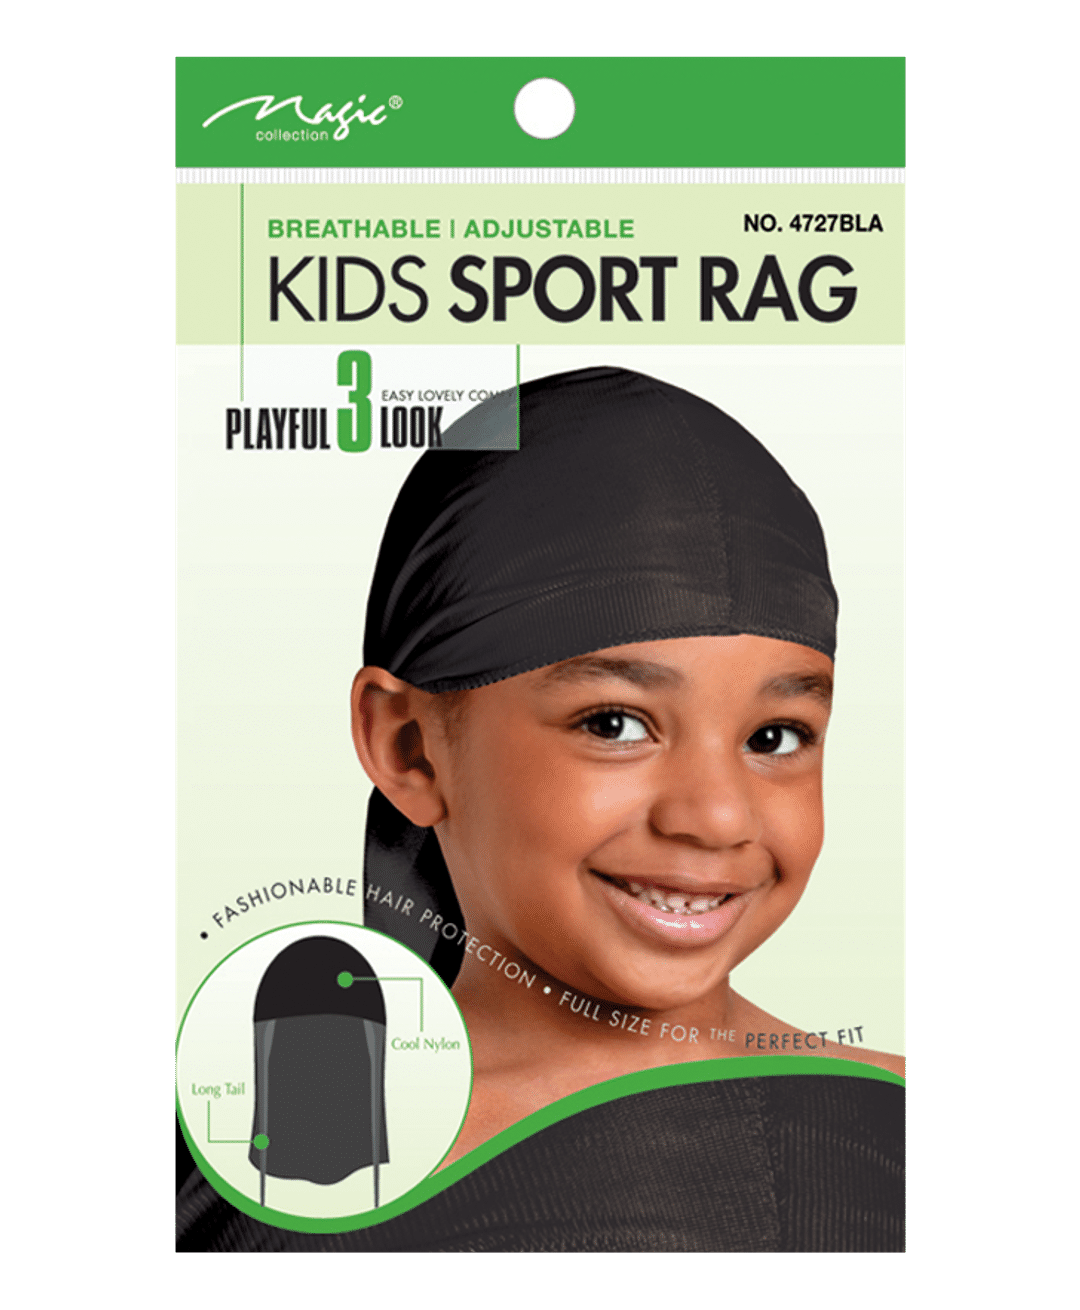 Magic Collection Kids Sport Rag Black - 4727bla